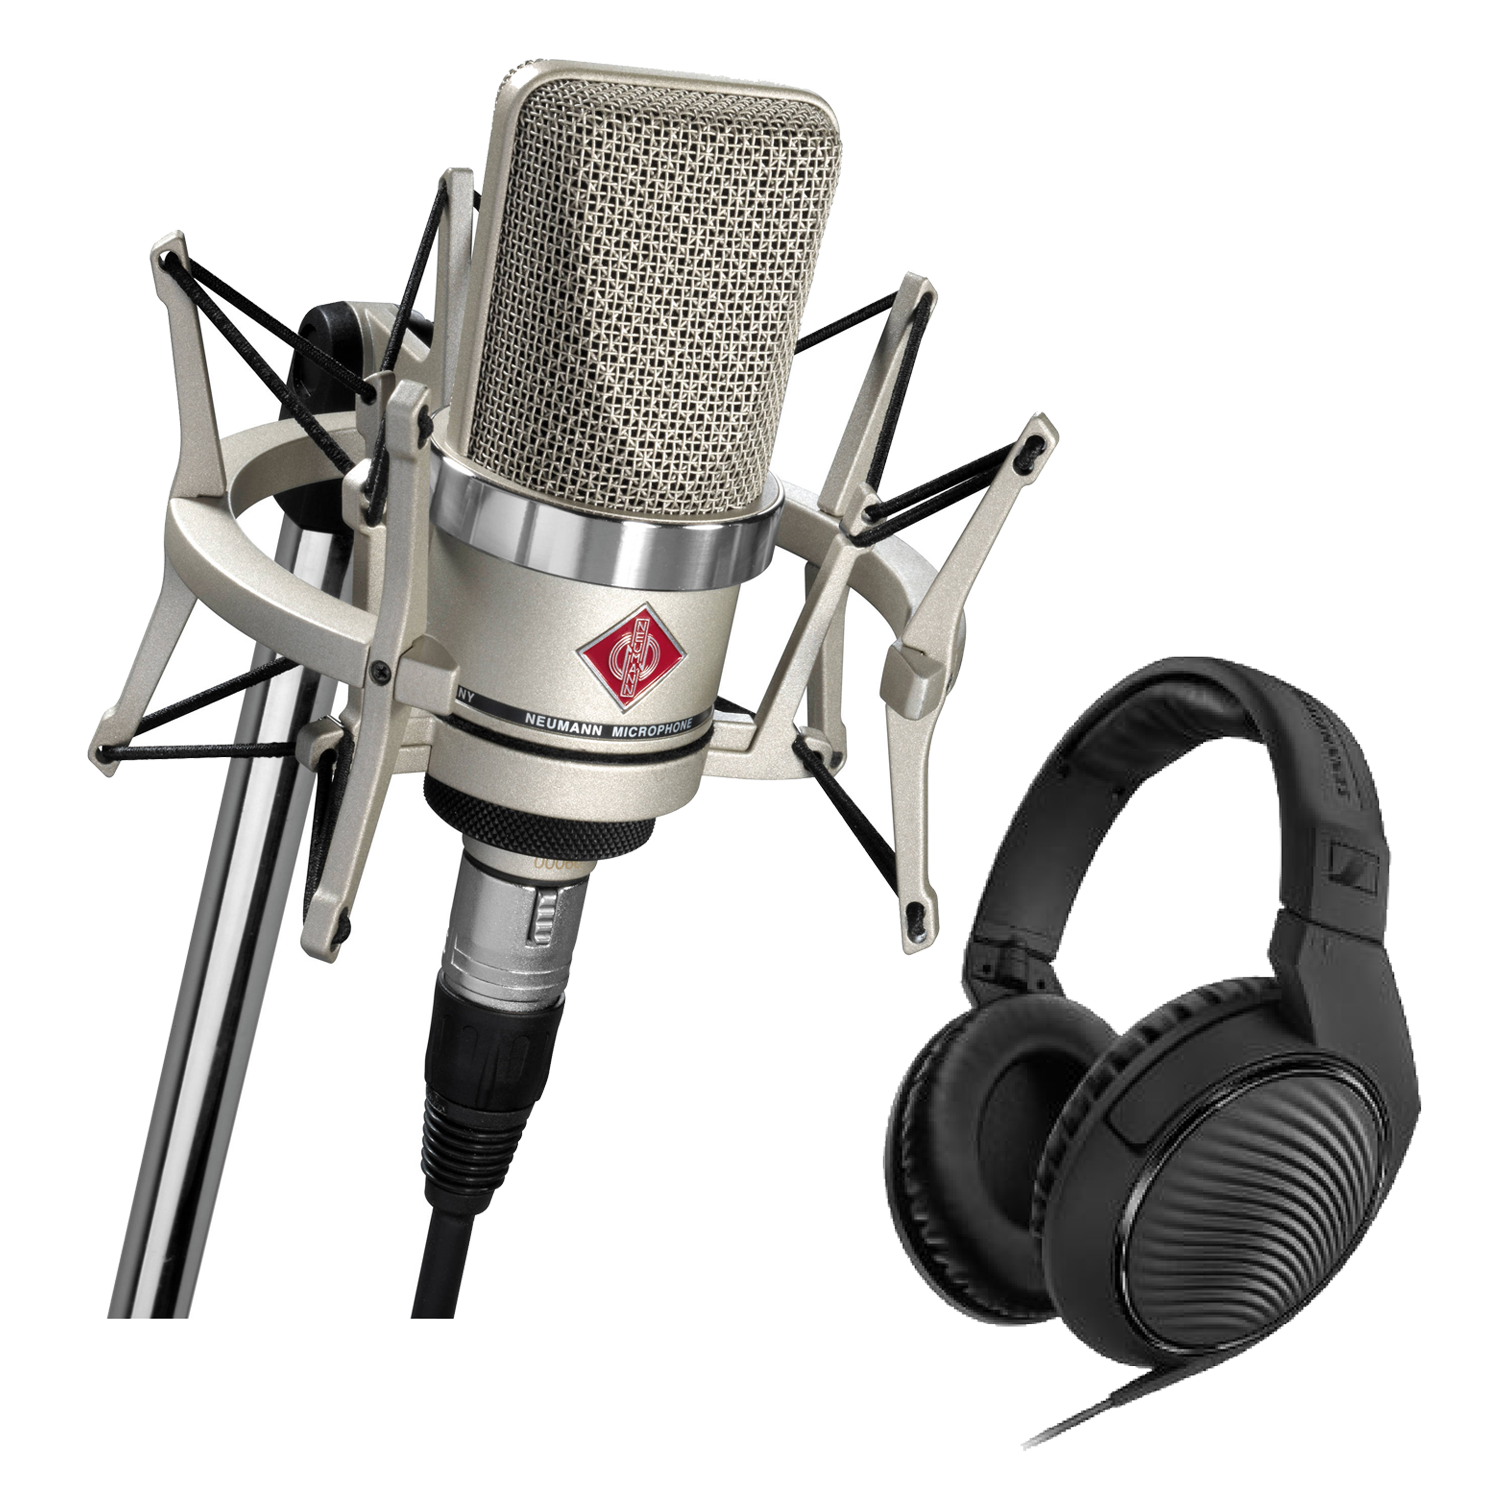 Large-Diaphragm Studio Condenser Microphone (Studio Set, Black/Silver) with Free Sennheiser HD 200 Pro   TLM 102 Studio set  with free Sennheiser HD 200 Pro neumann